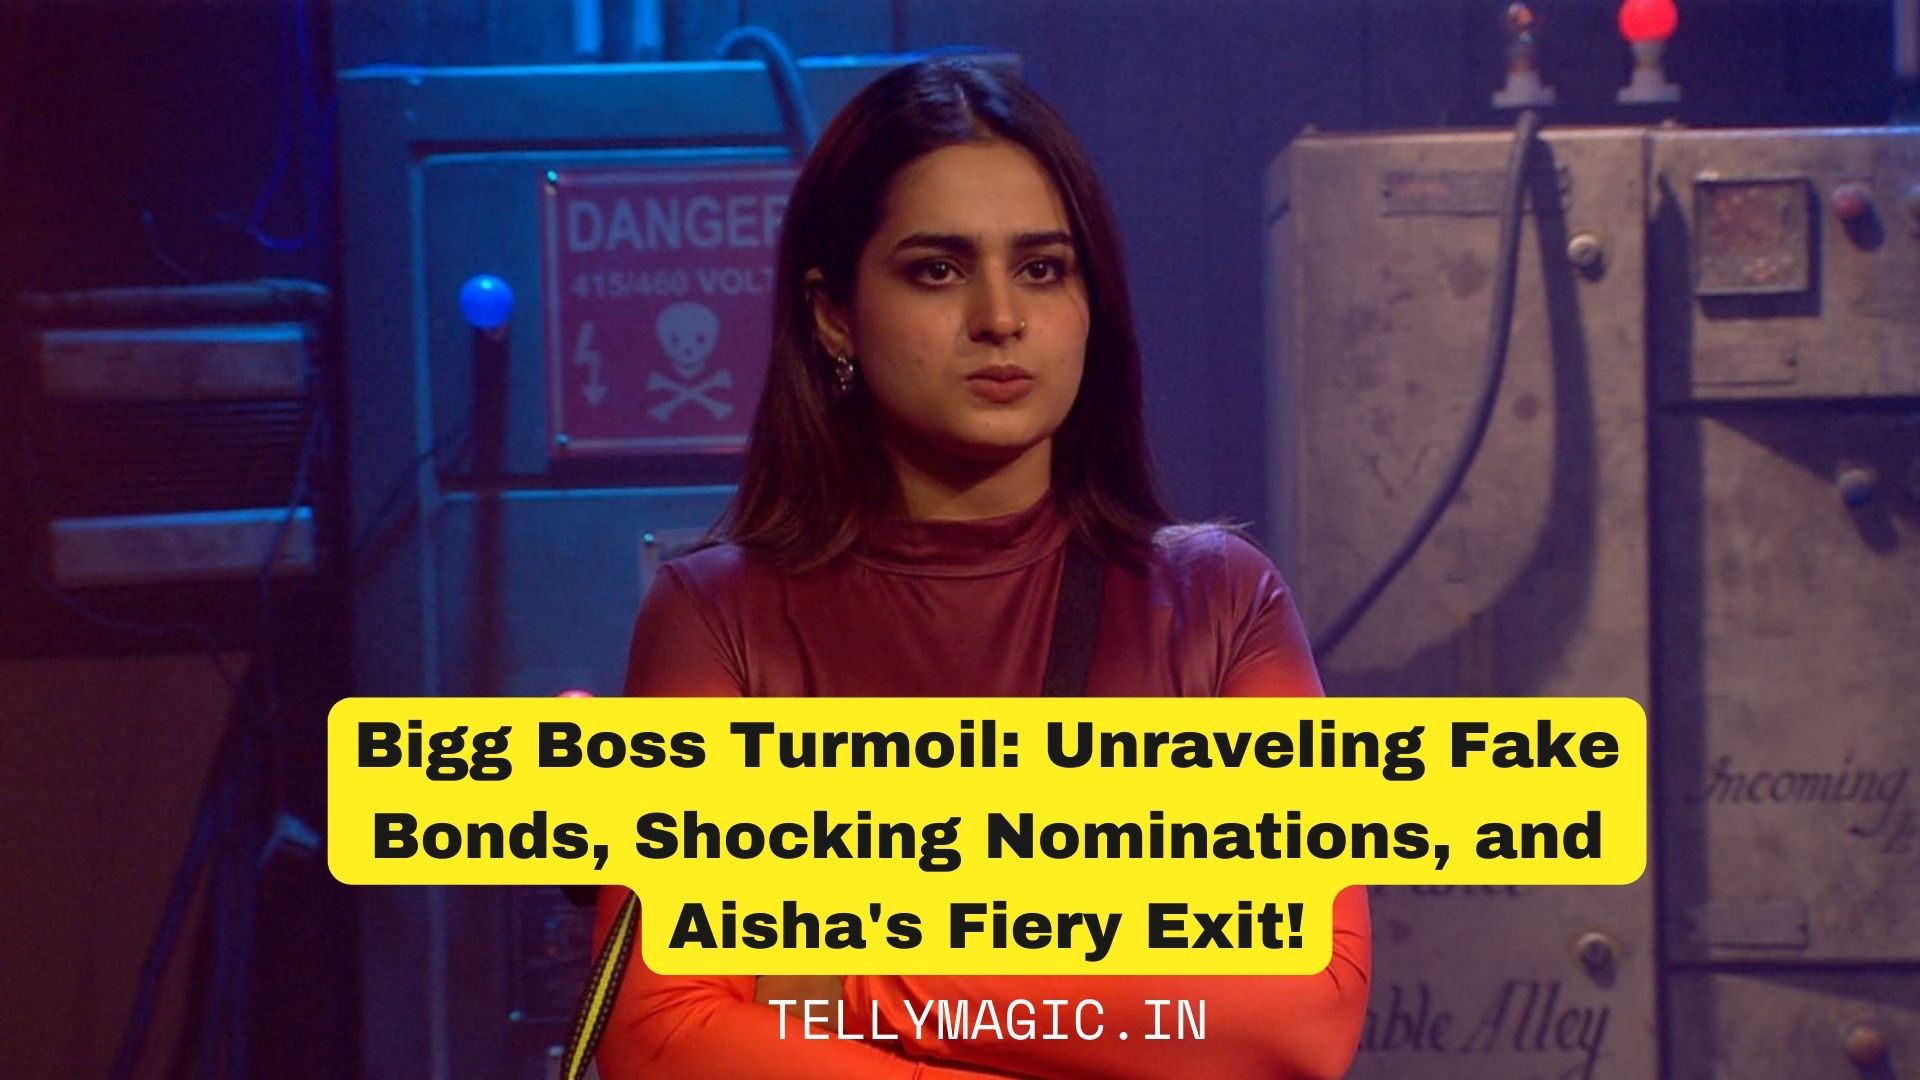 Bigg Boss Turmoil: Unraveling Fake Bonds, Shocking Nominations, and Aisha Fiery Exit!